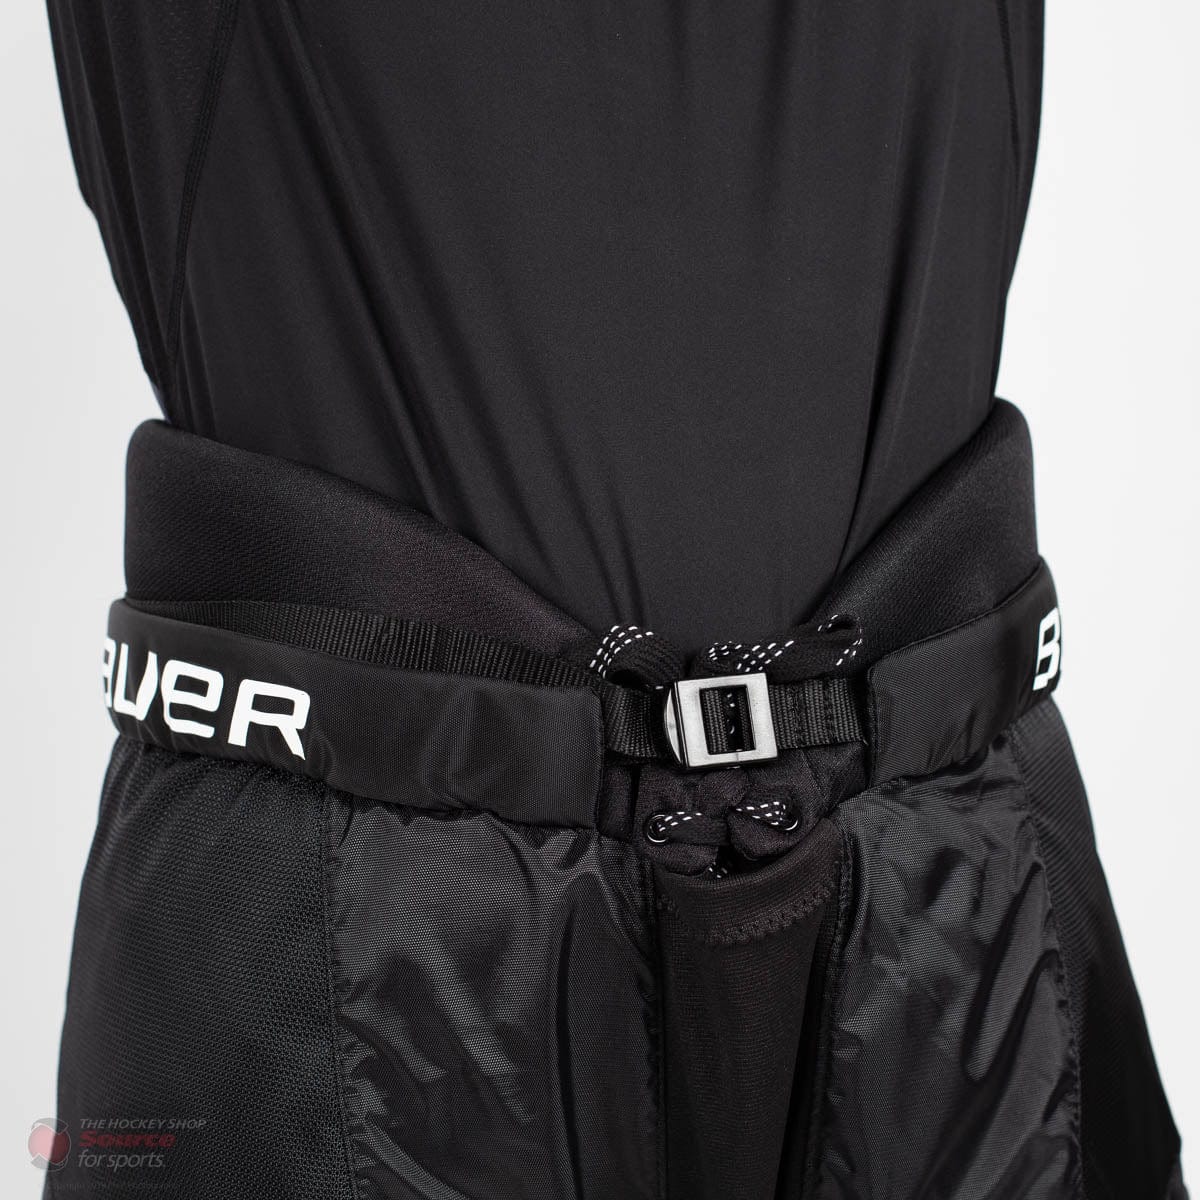 Bauer NSX Junior Hockey Pants